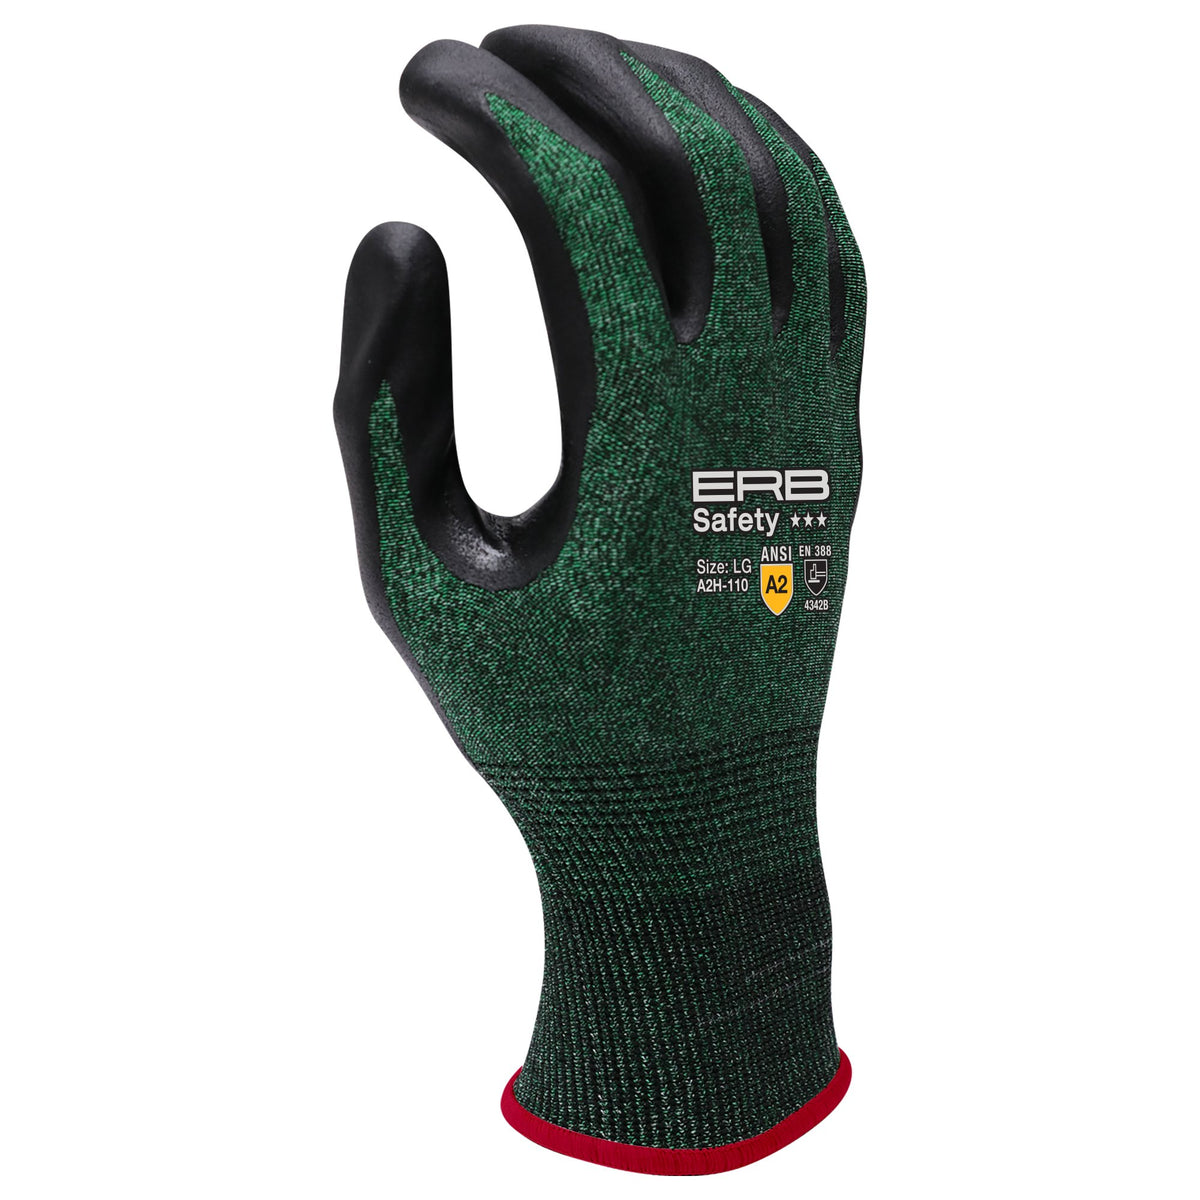 A2H-110 HPPE Cut Glove with Nitrile Micro-Foam Coating 1pair